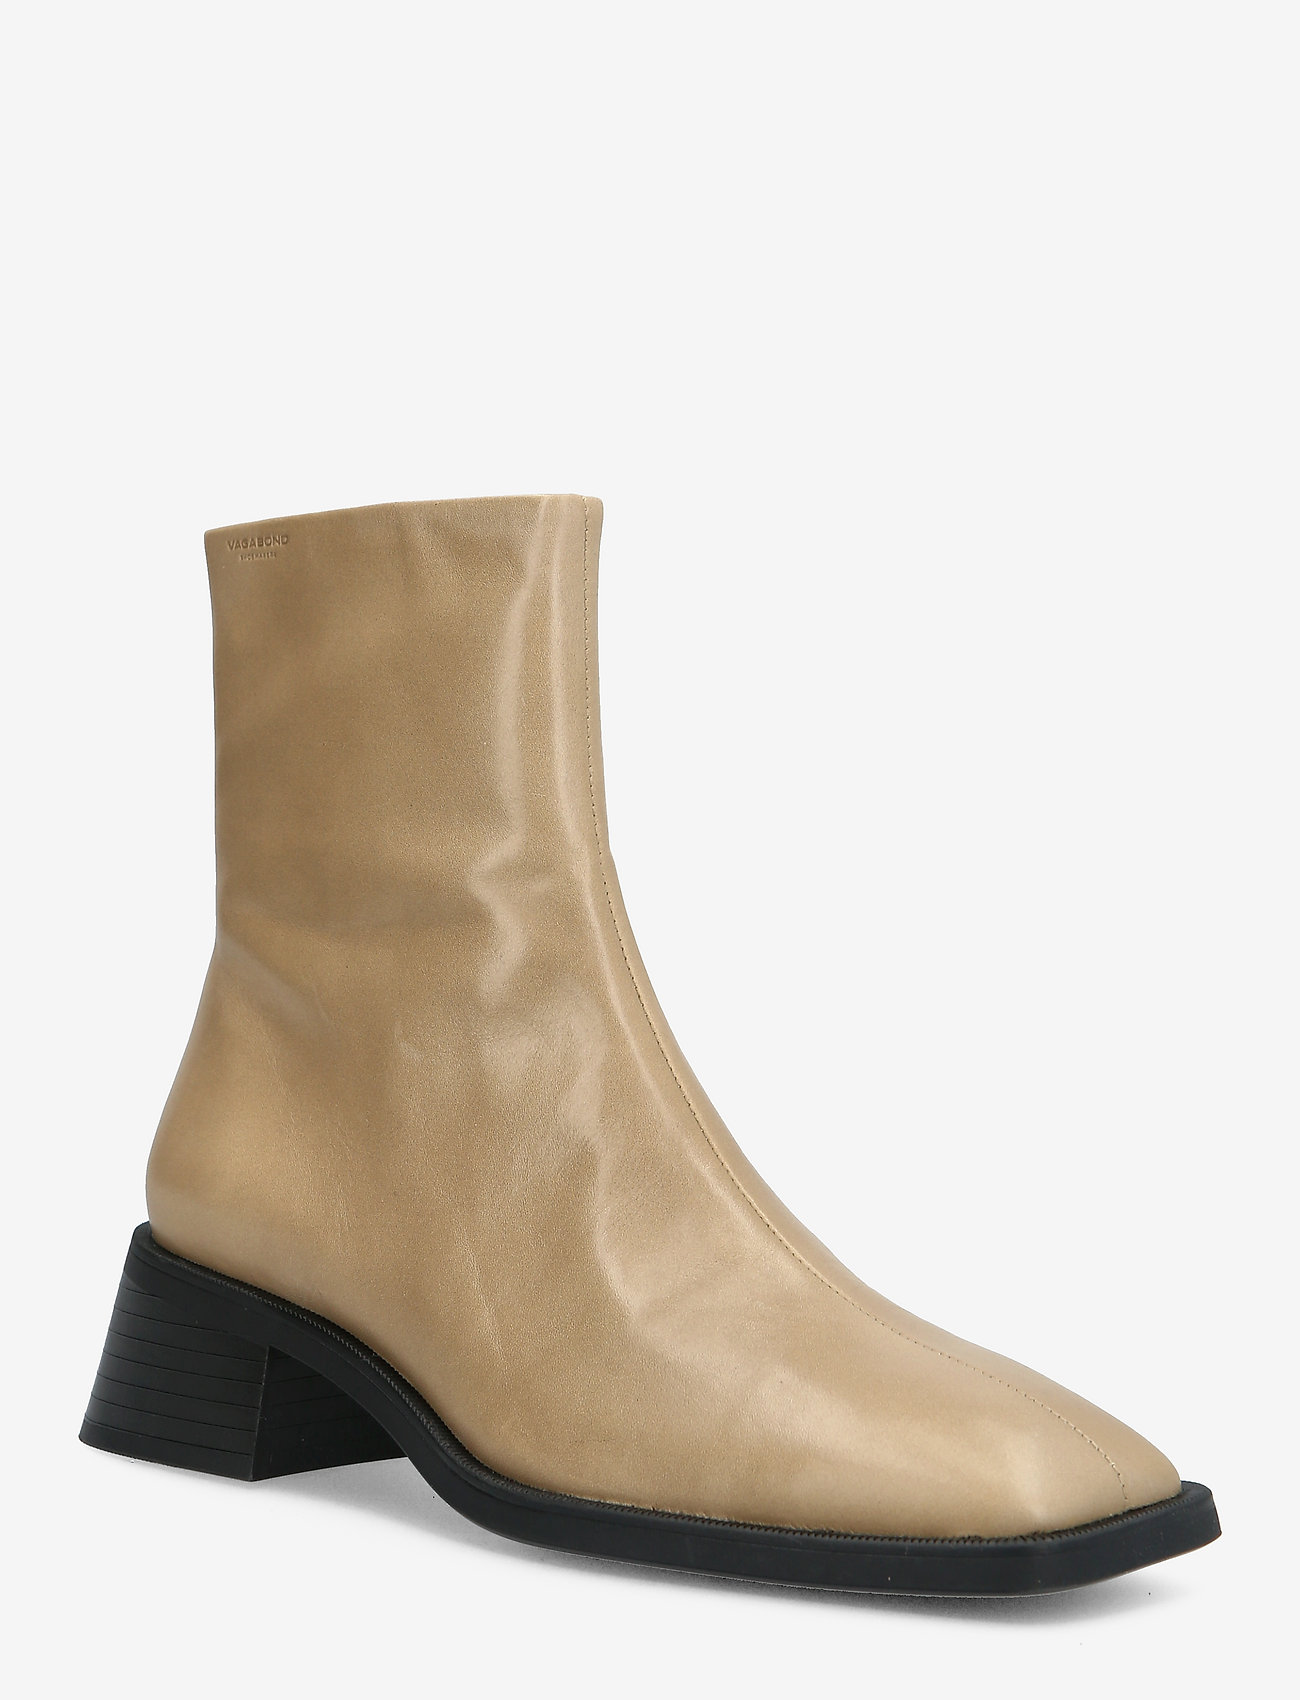 VAGABOND Blanca - Flat ankle boots |